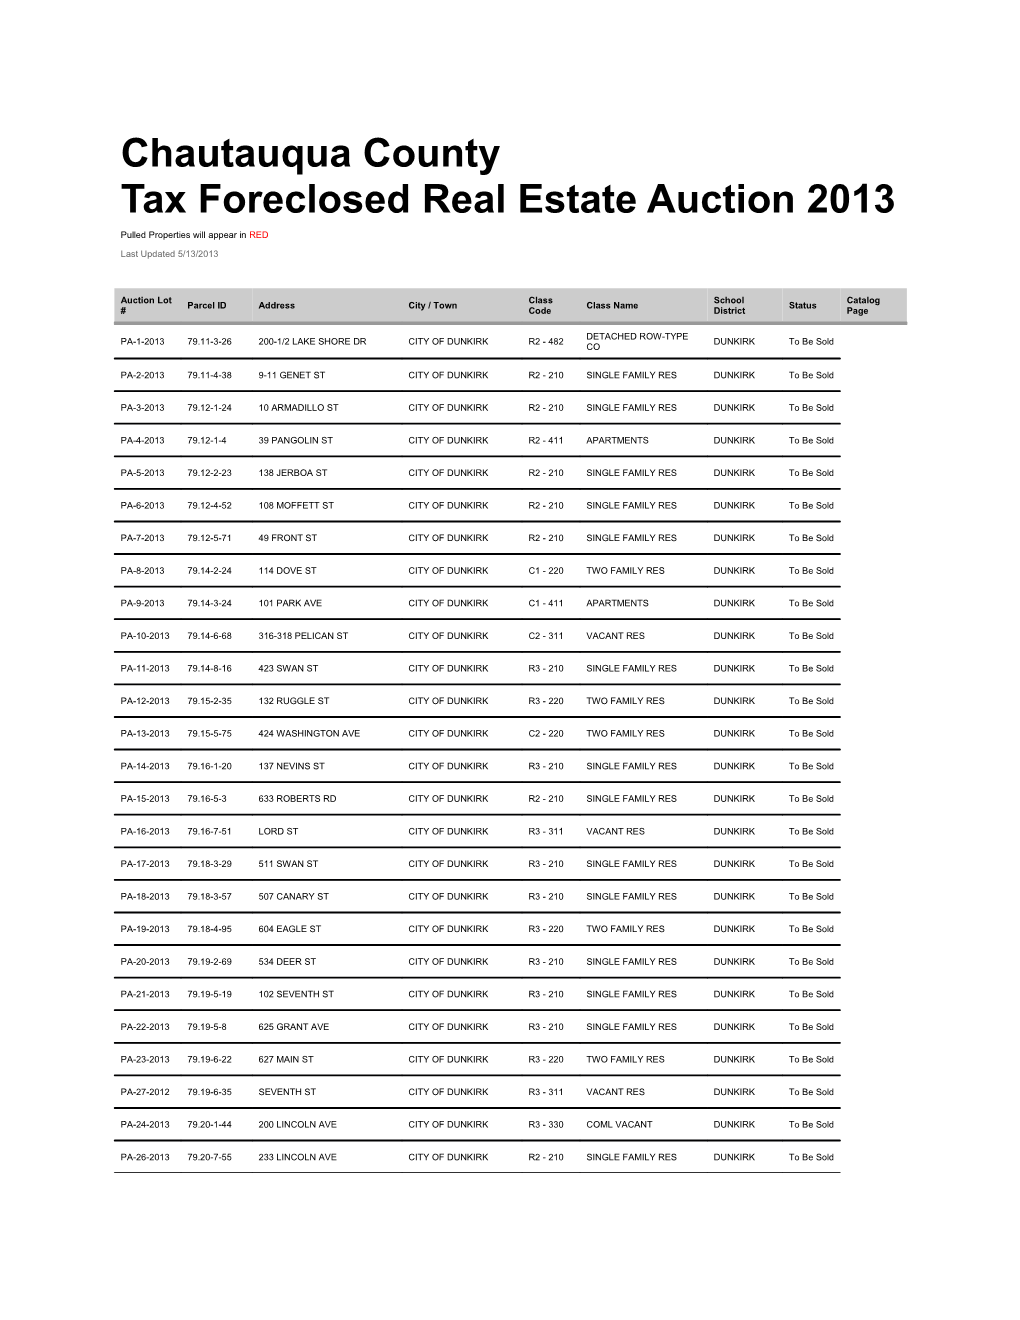 Chautauqua County Tax Foreclosed Real Estate Auction 2013